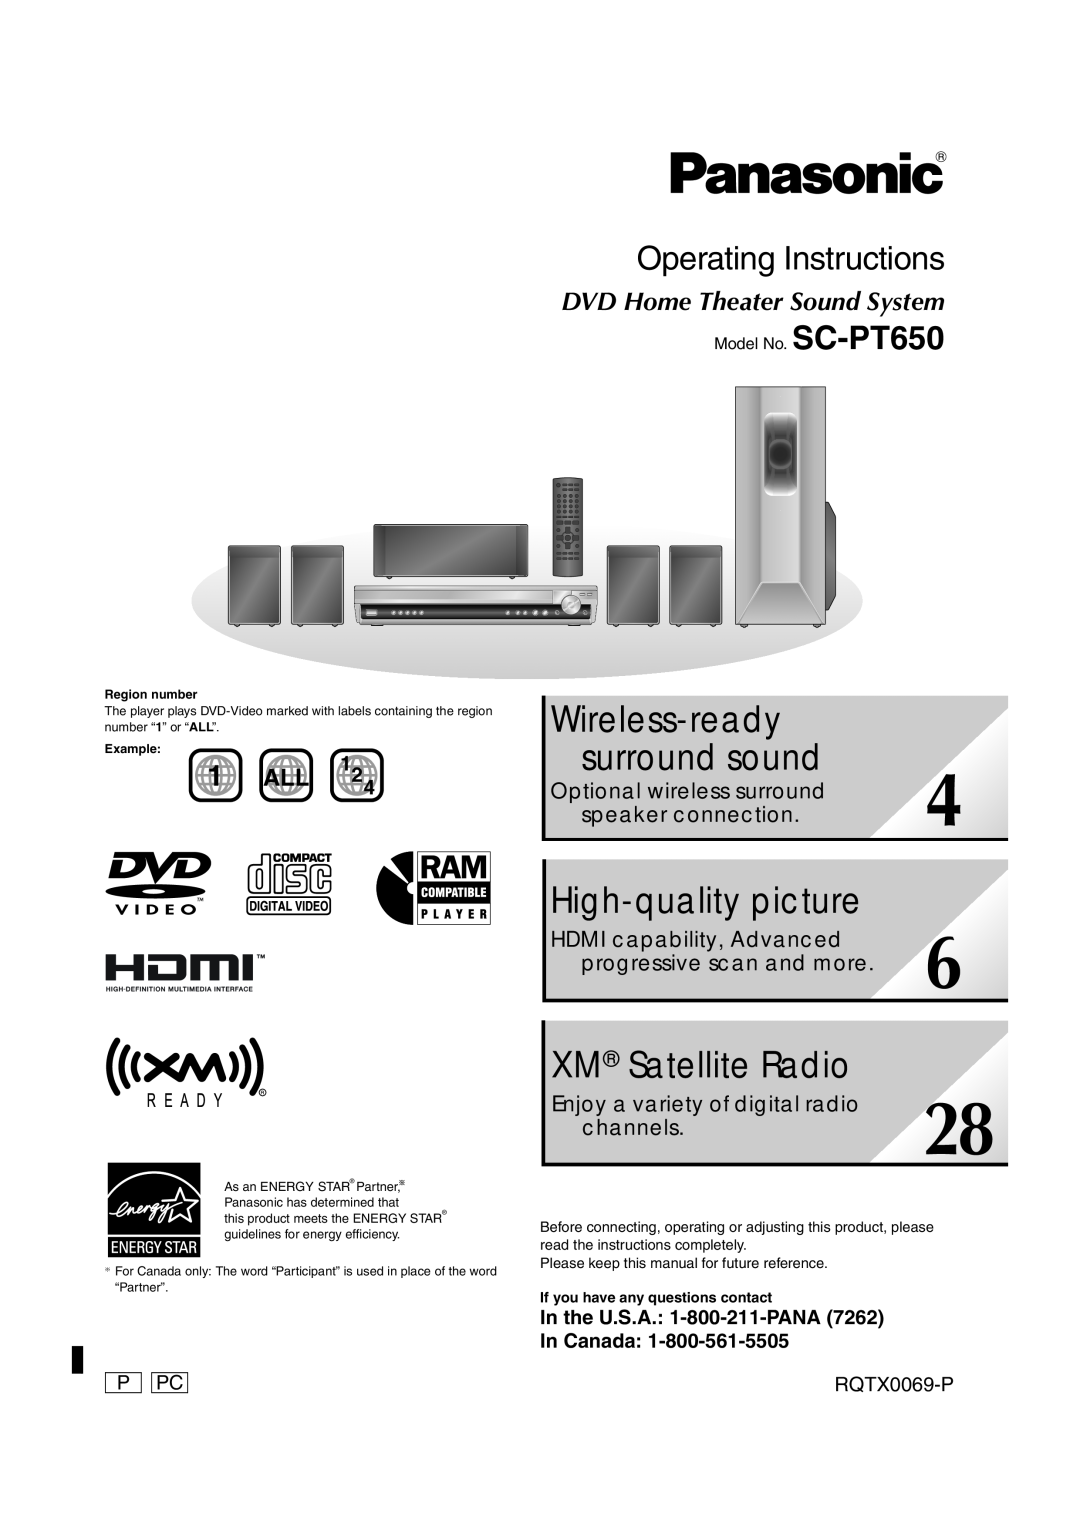 Panasonic SC-PT650 operating instructions Wireless-ready, surround sound, High-qualitypicture, XM Satellite Radio, 1 ALL 